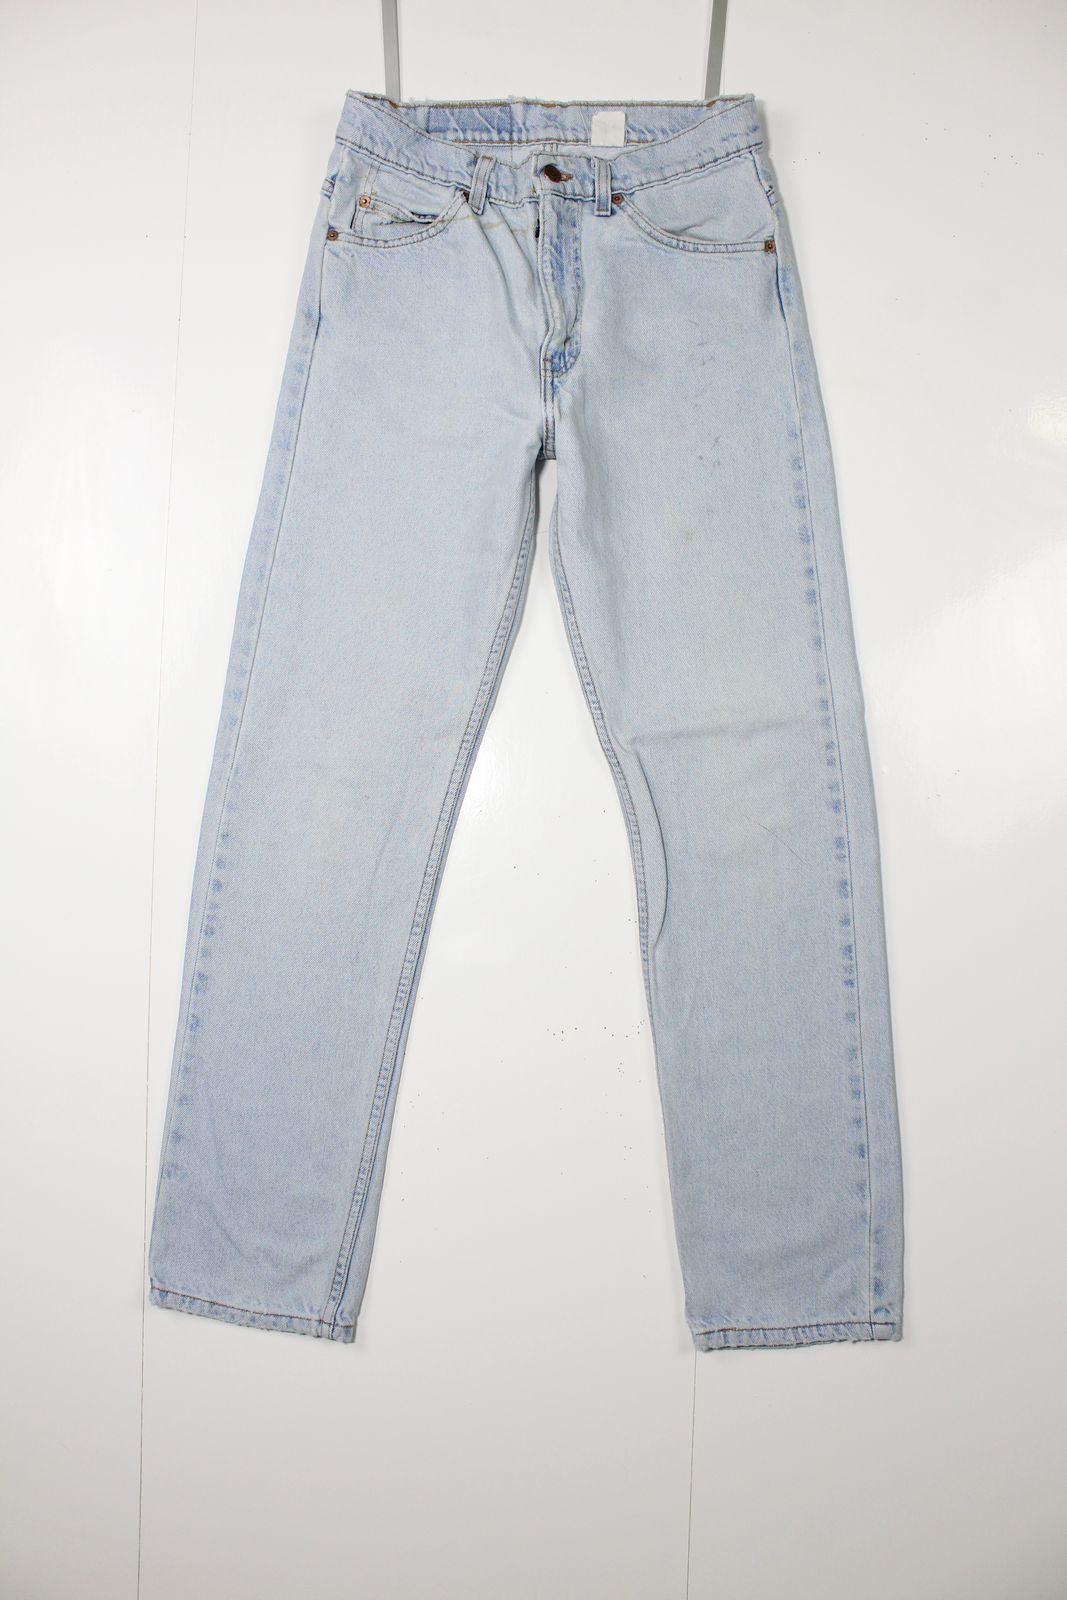 Levi's 505 Orange Tab Denim W30 L30 Made In USA Jeans Vintage